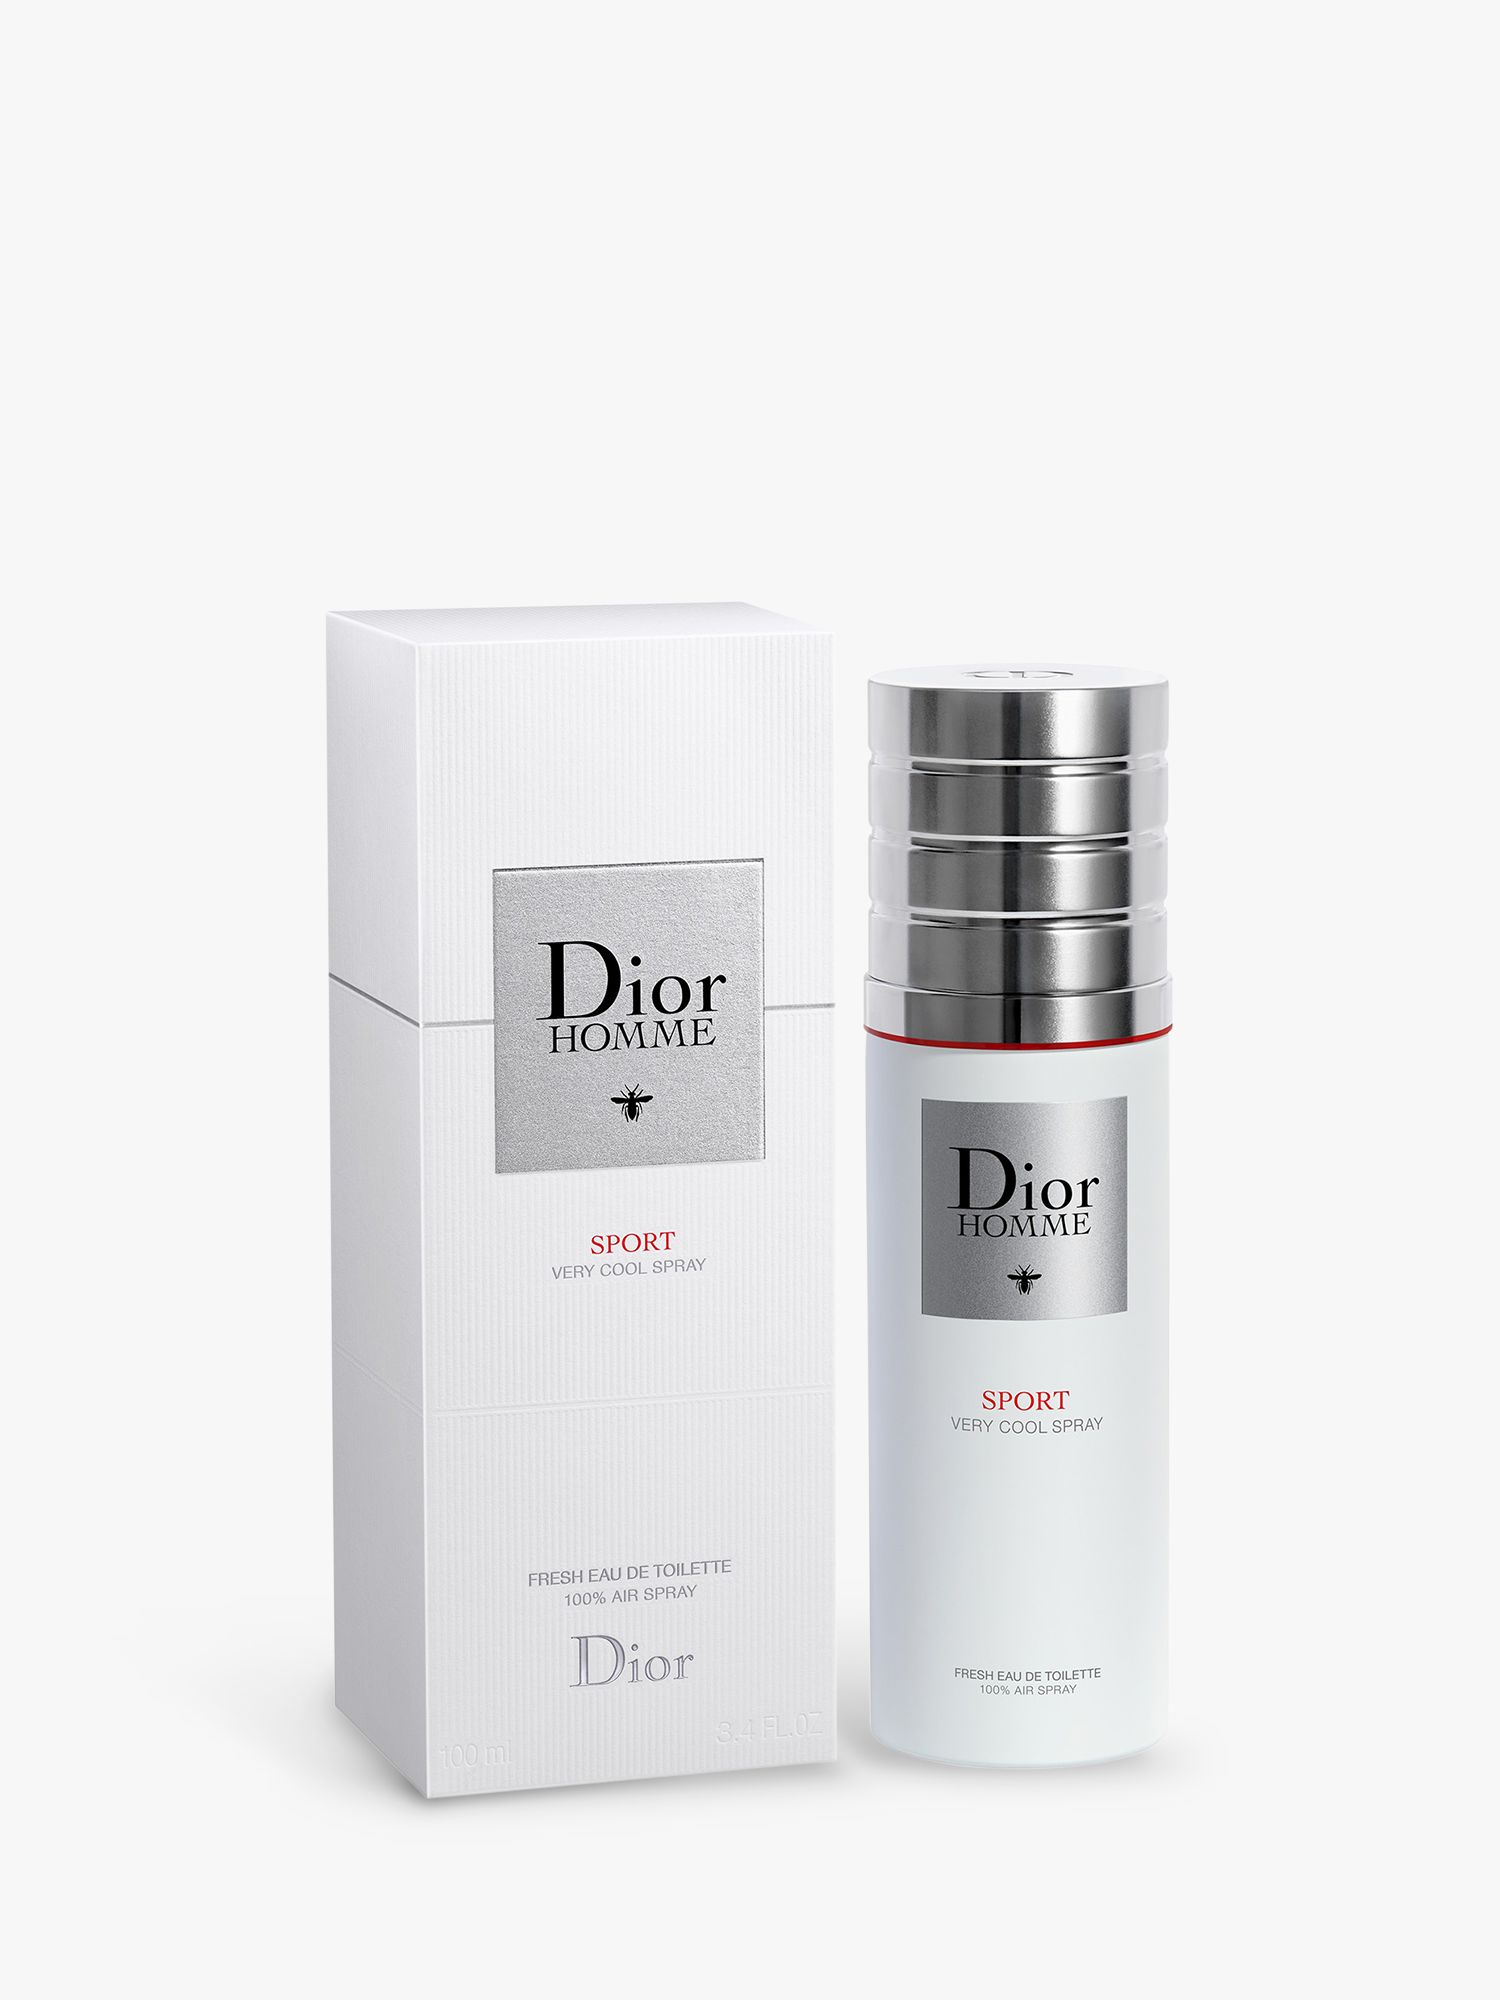 Dior Homme Sport Very Cool Spray Eau de Toilette, 100ml at John Lewis \u0026  Partners